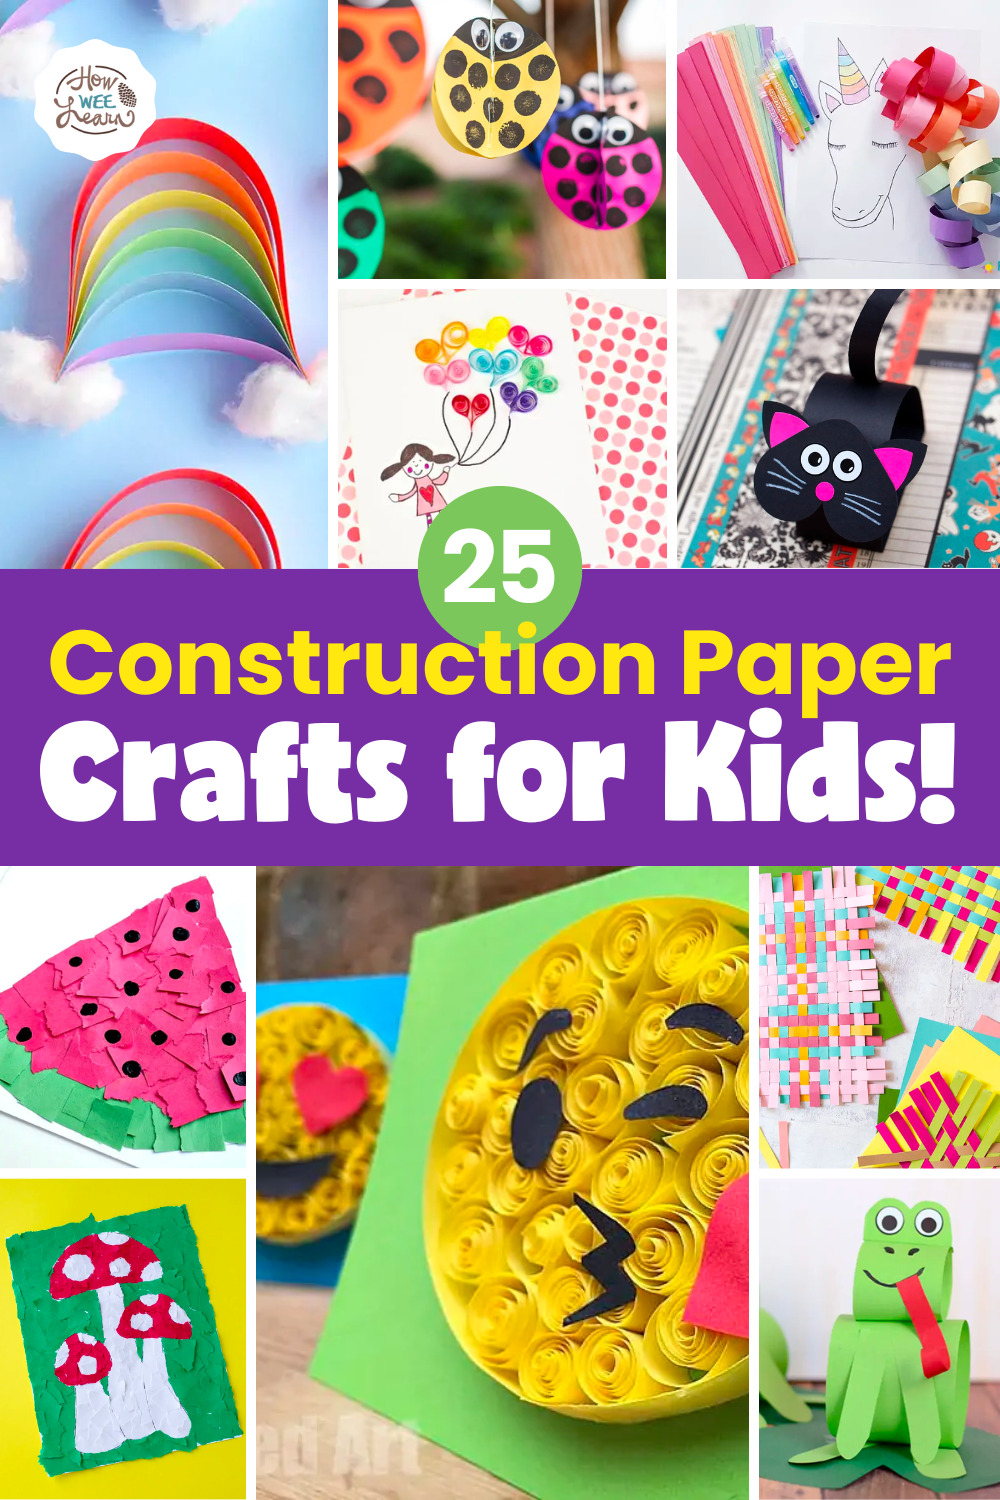 https://www.howweelearn.com/wp-content/uploads/2022/07/25-Construction-Paper-Crafts-for-Kids.jpg